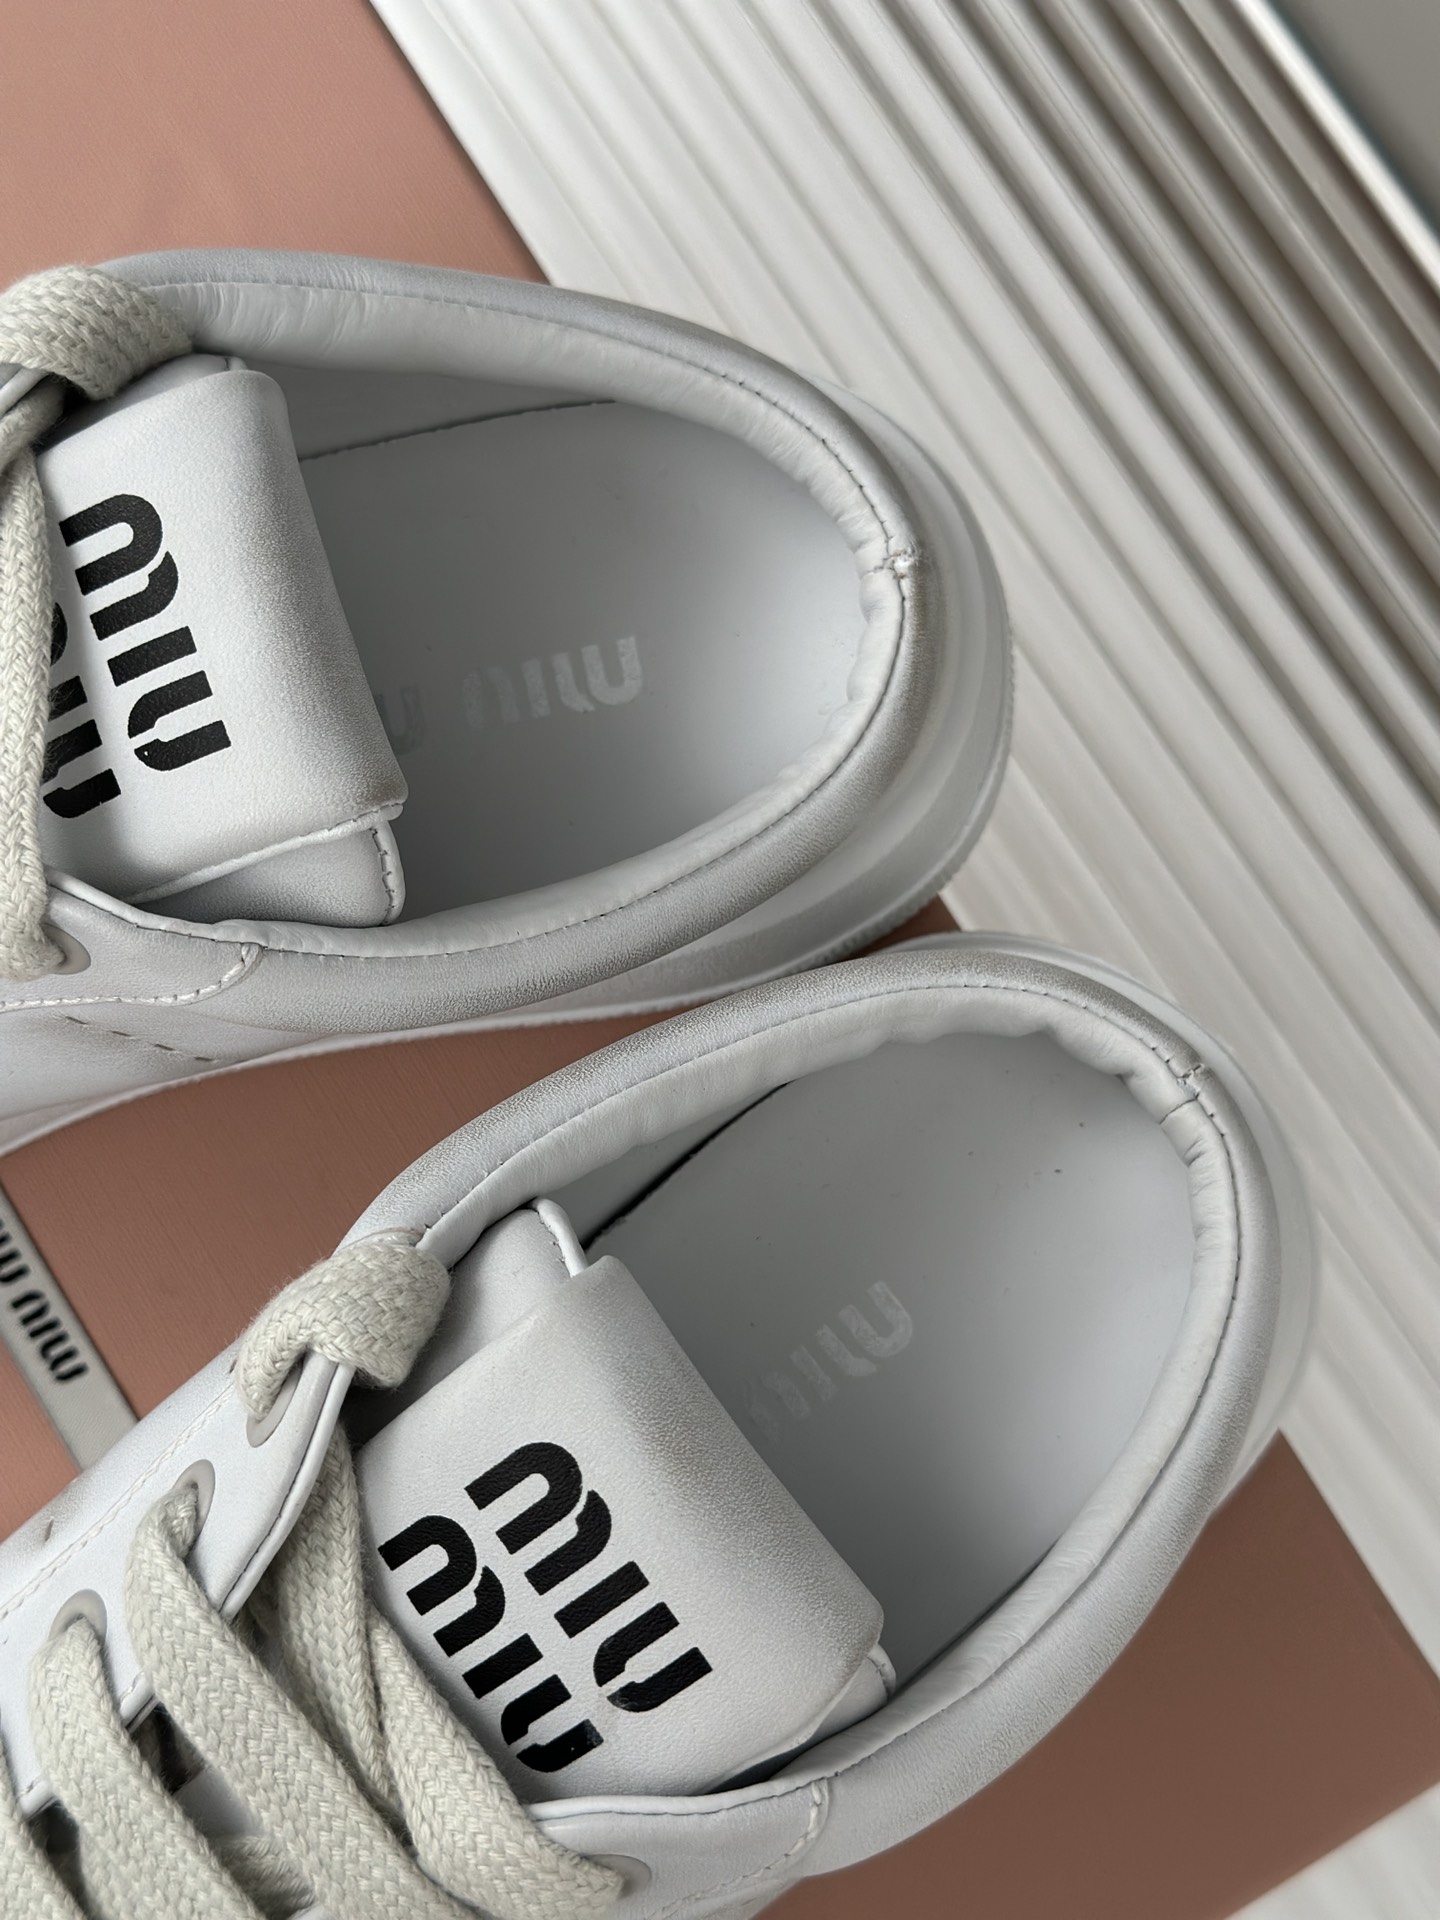 MIUMIU24春夏新品做旧小白鞋鞋面采用进口牛皮内里垫脚是进口羊皮原版开模橡胶大底码数35-3940定